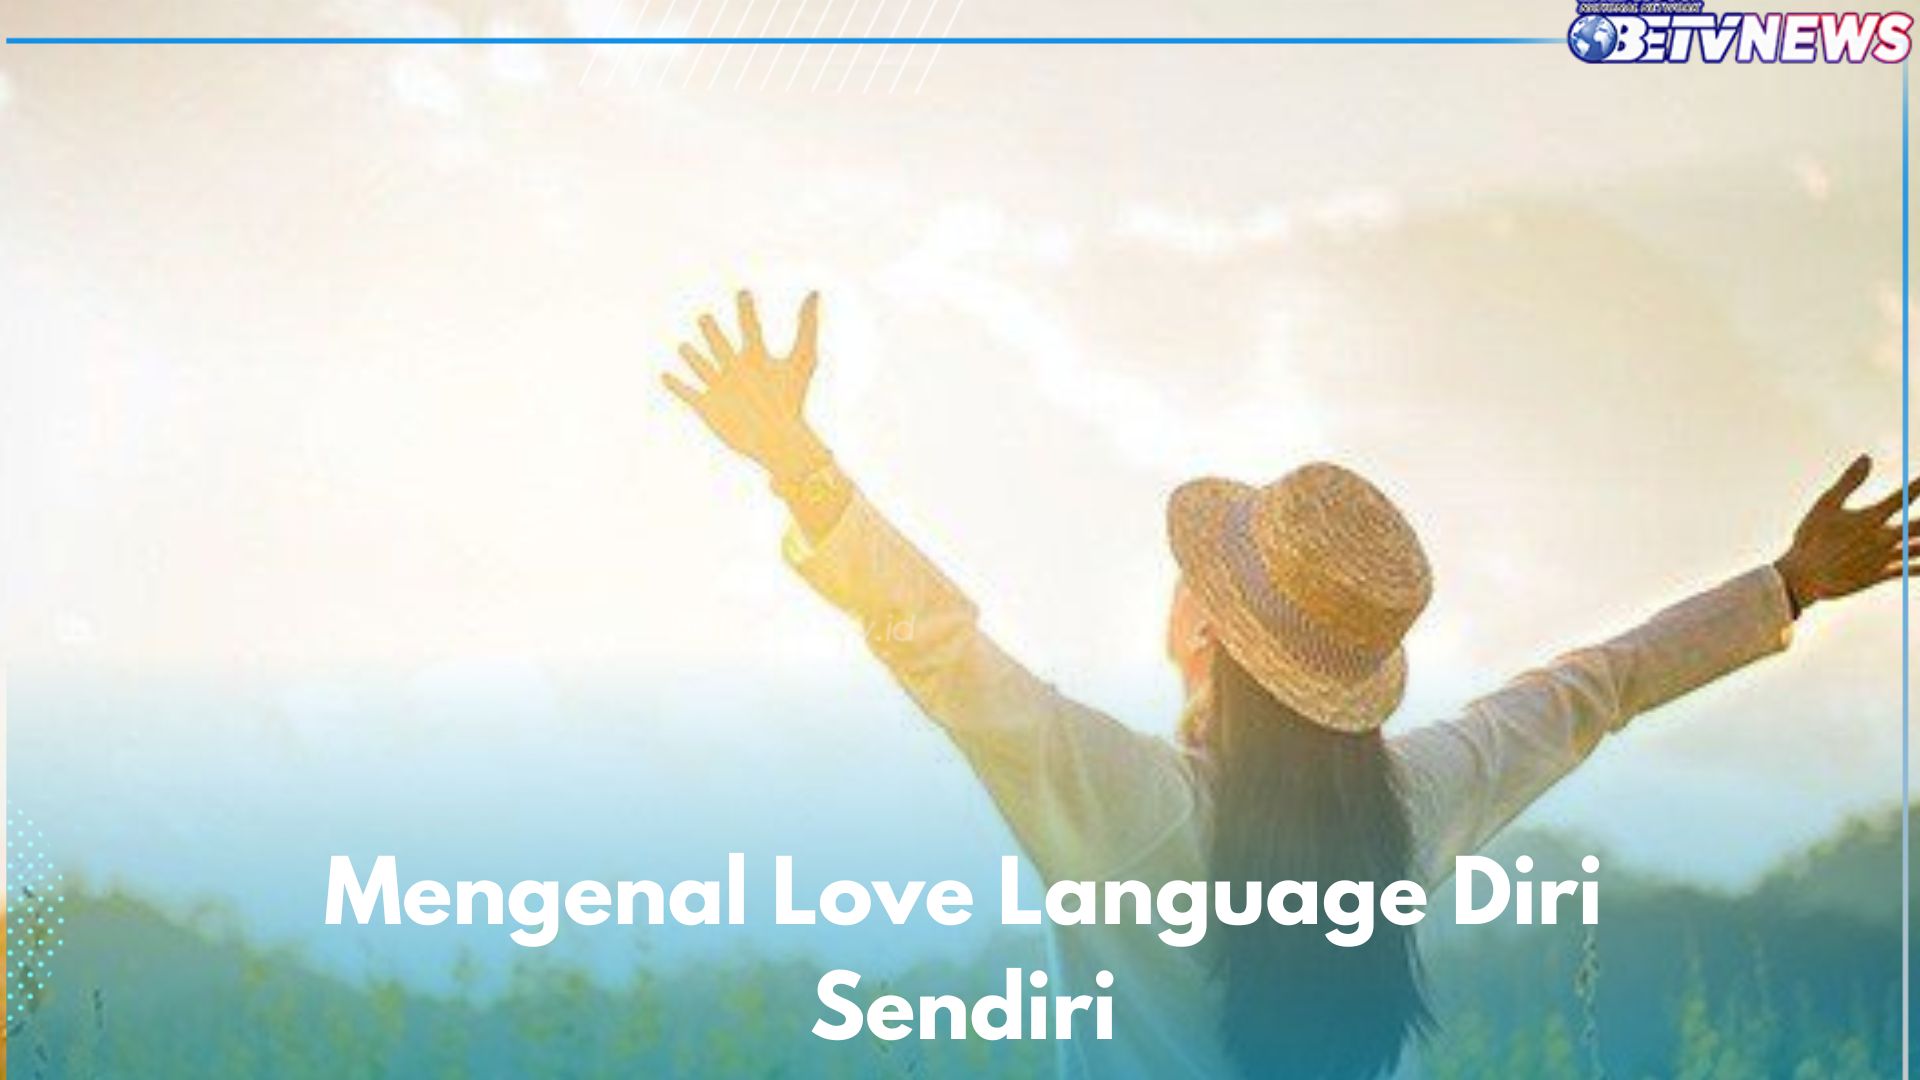 Mengenal 5 Love Language Diri Sendiri, Senang Memberi Hadiah hingga Quality Time